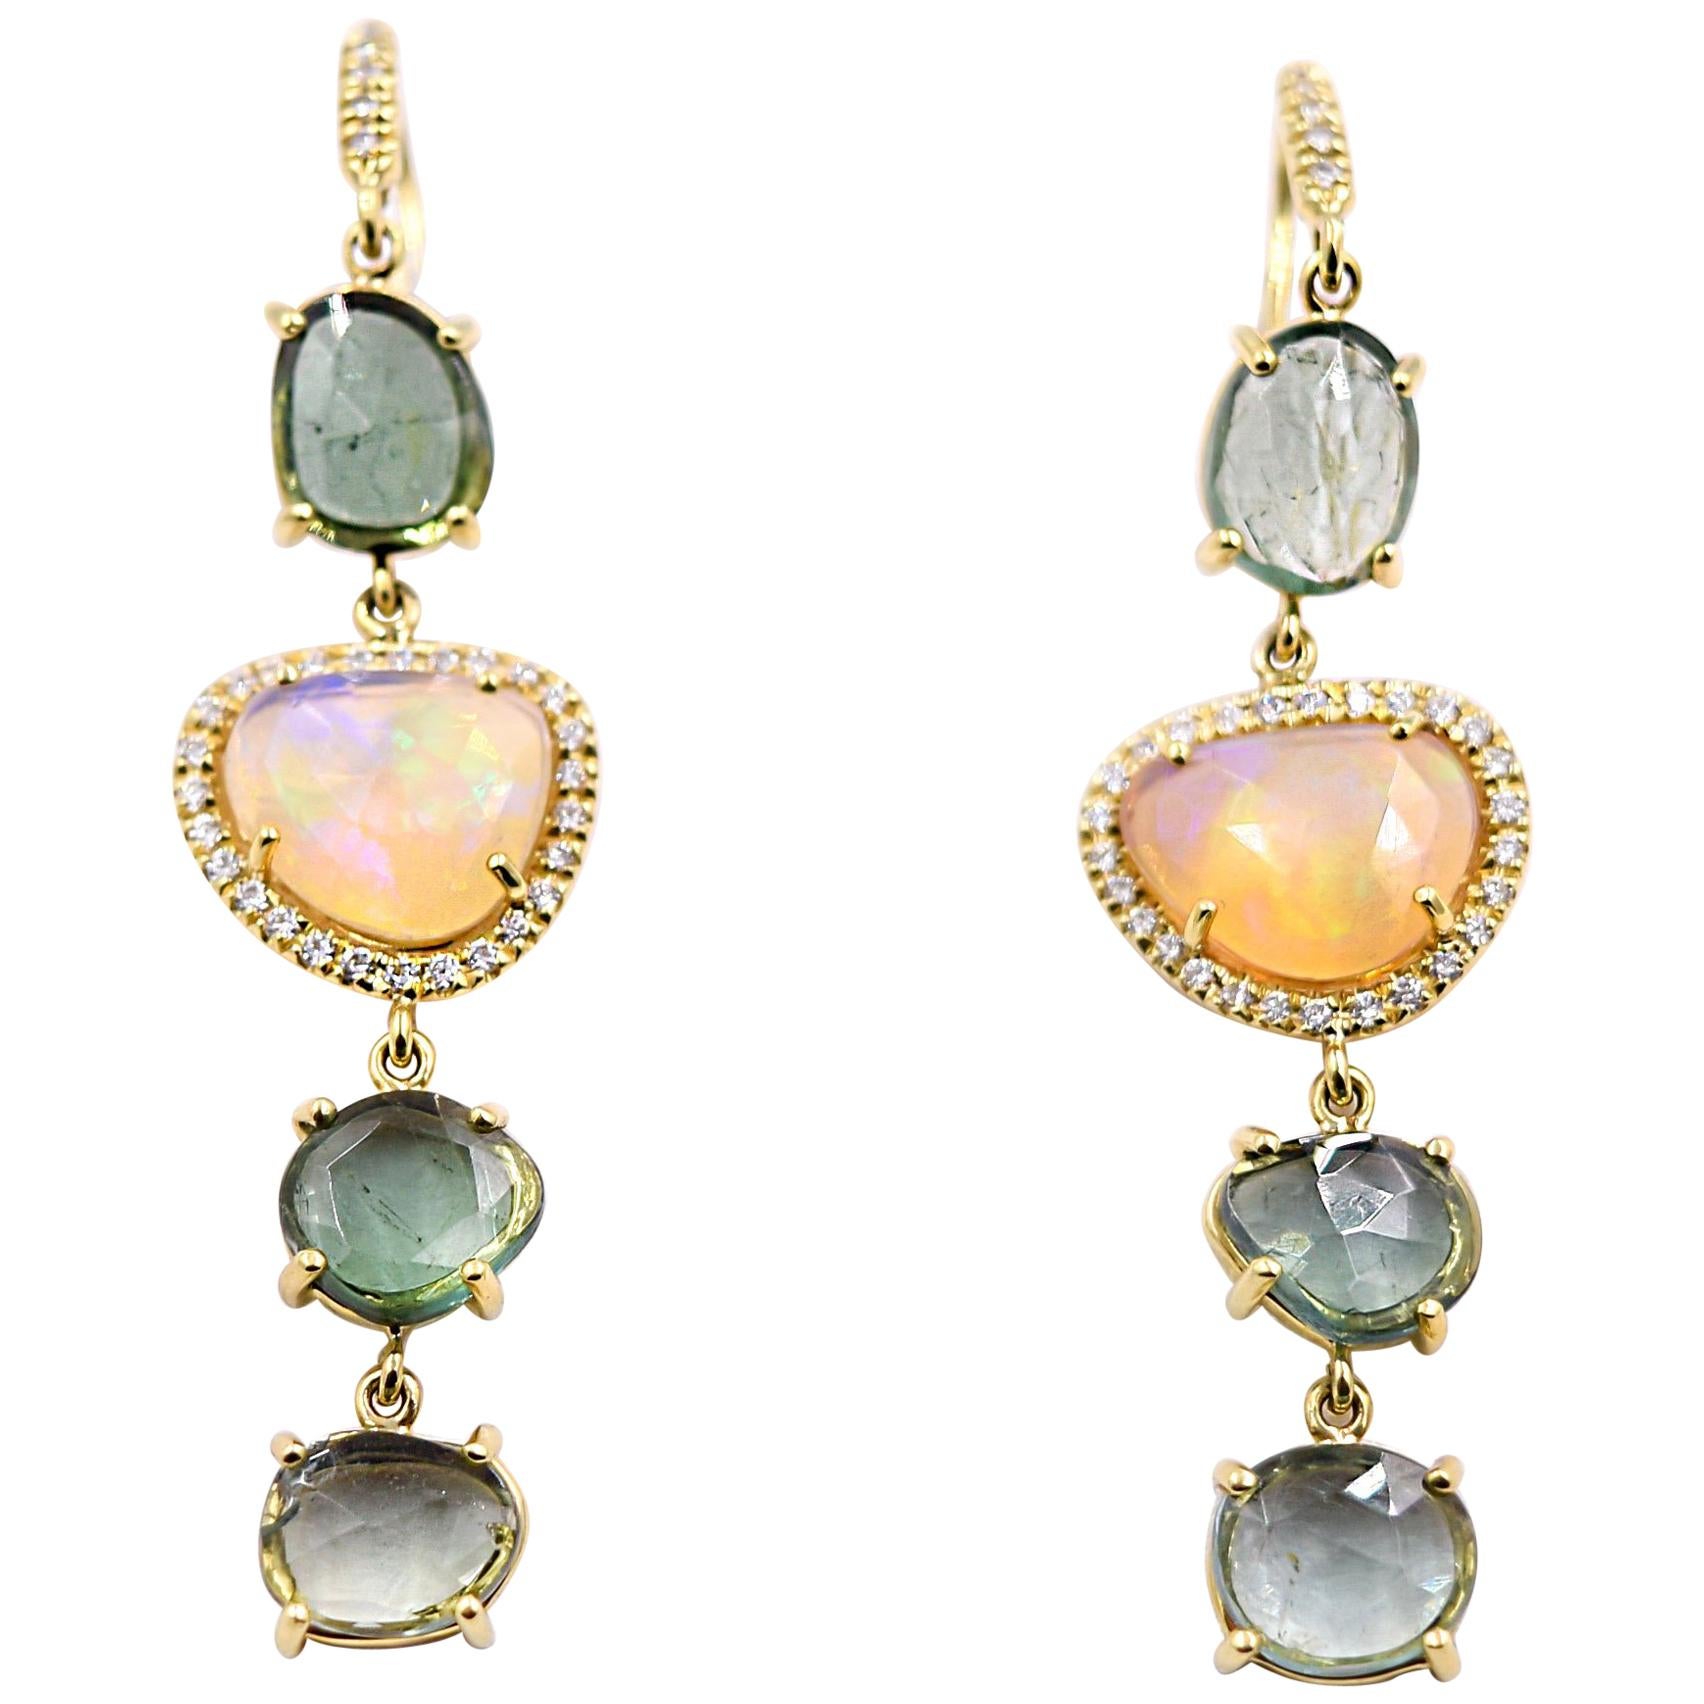 Lauren K. 9.10 Carat Green Tourmaline and Faceted Opal Dangle Earrings 18K Gold For Sale